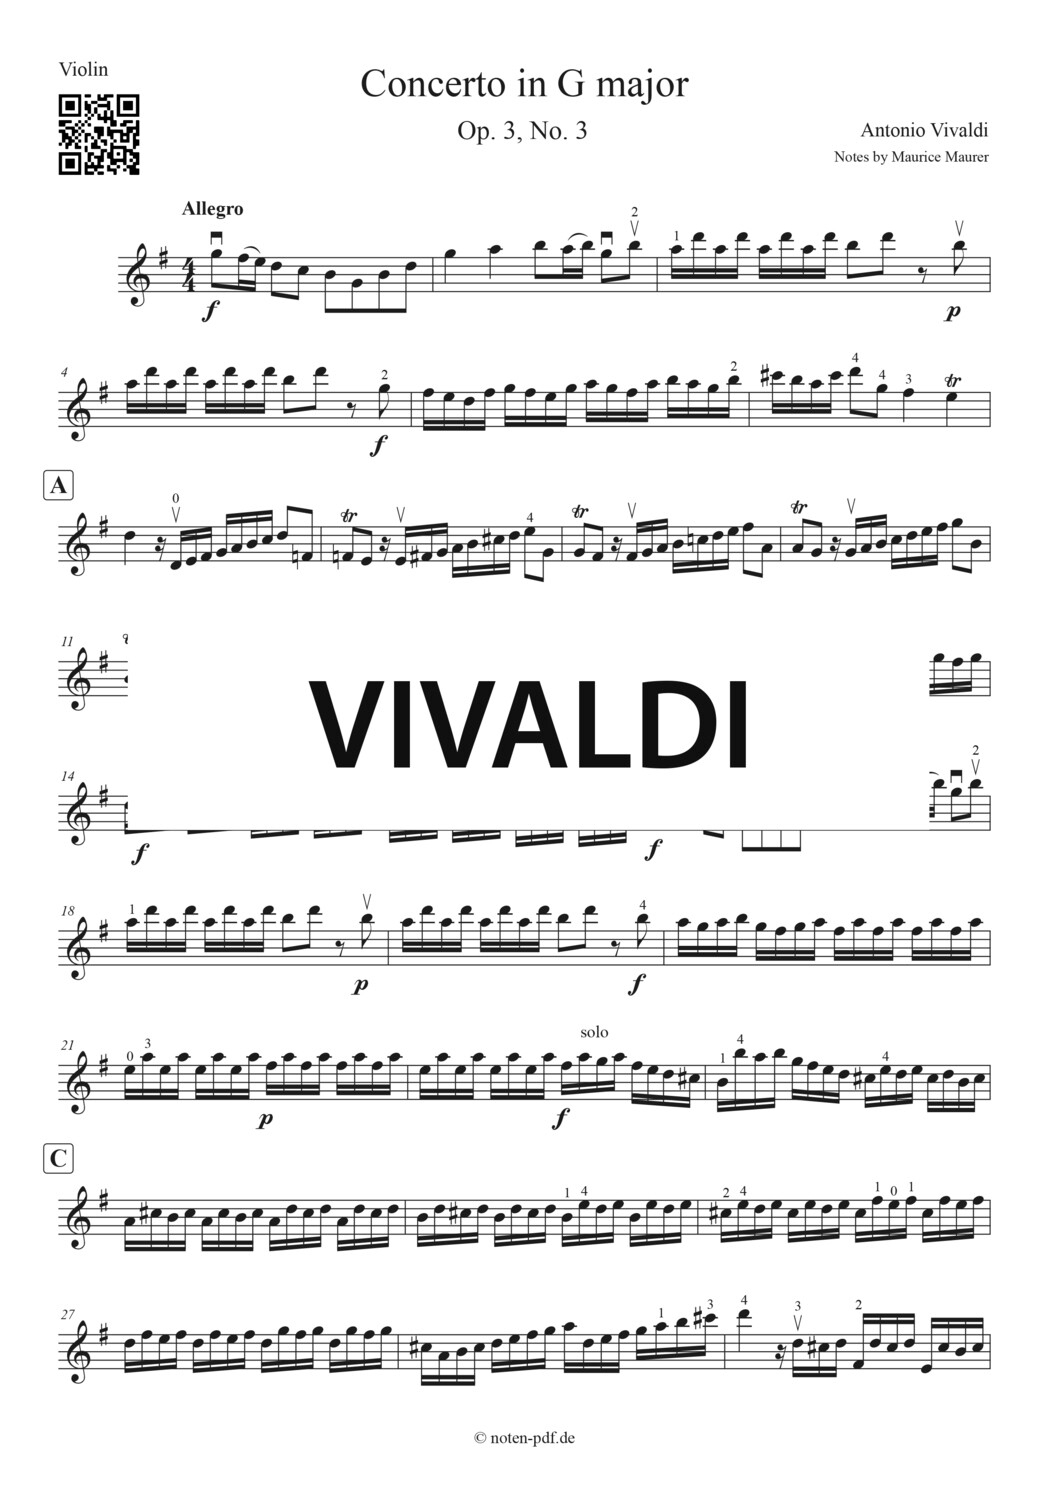 Vivaldi: Concerto in G Major - All Movements